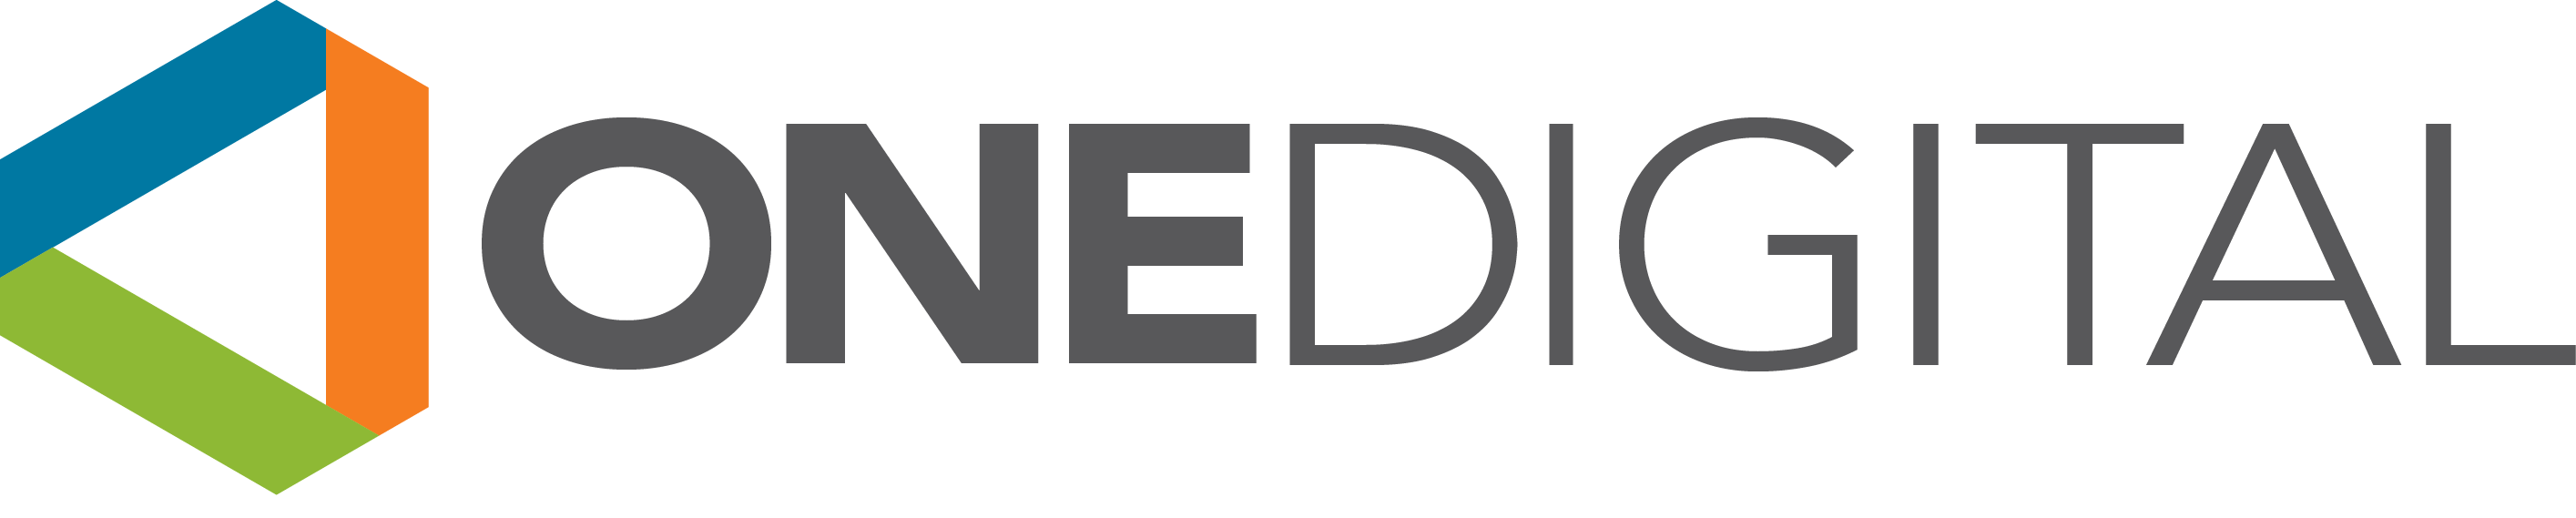 OneDigital Tennessee logo